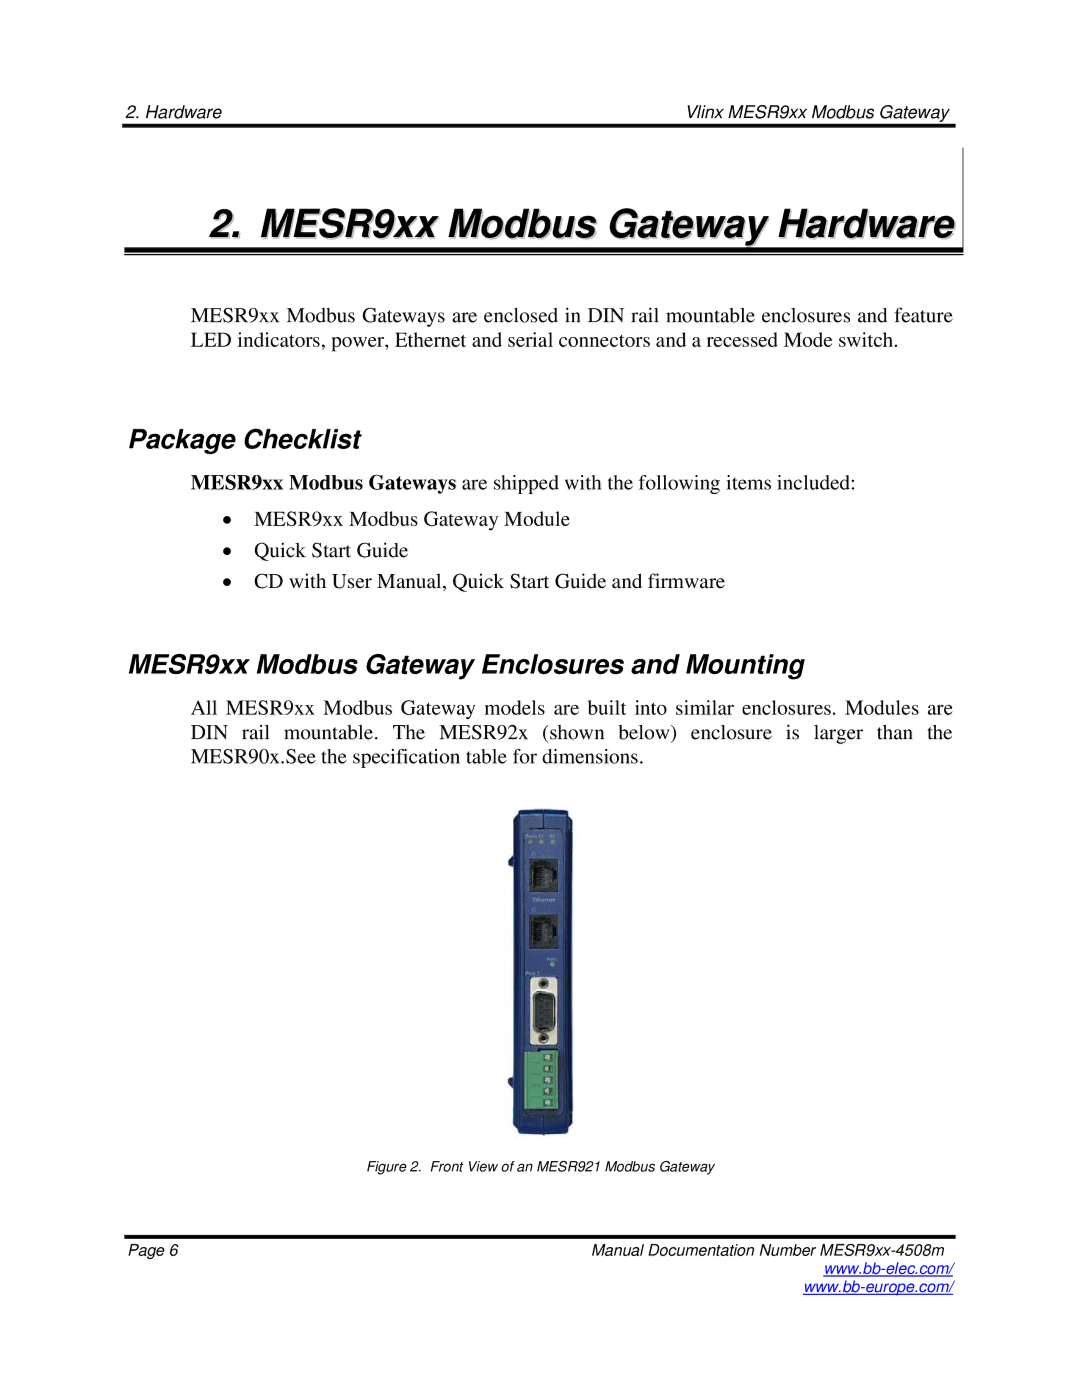 B&B Electronics MESR9xx Modbus Gateway Hardware, Package Checklist, MESR9xx Modbus Gateway Enclosures and Mounting 